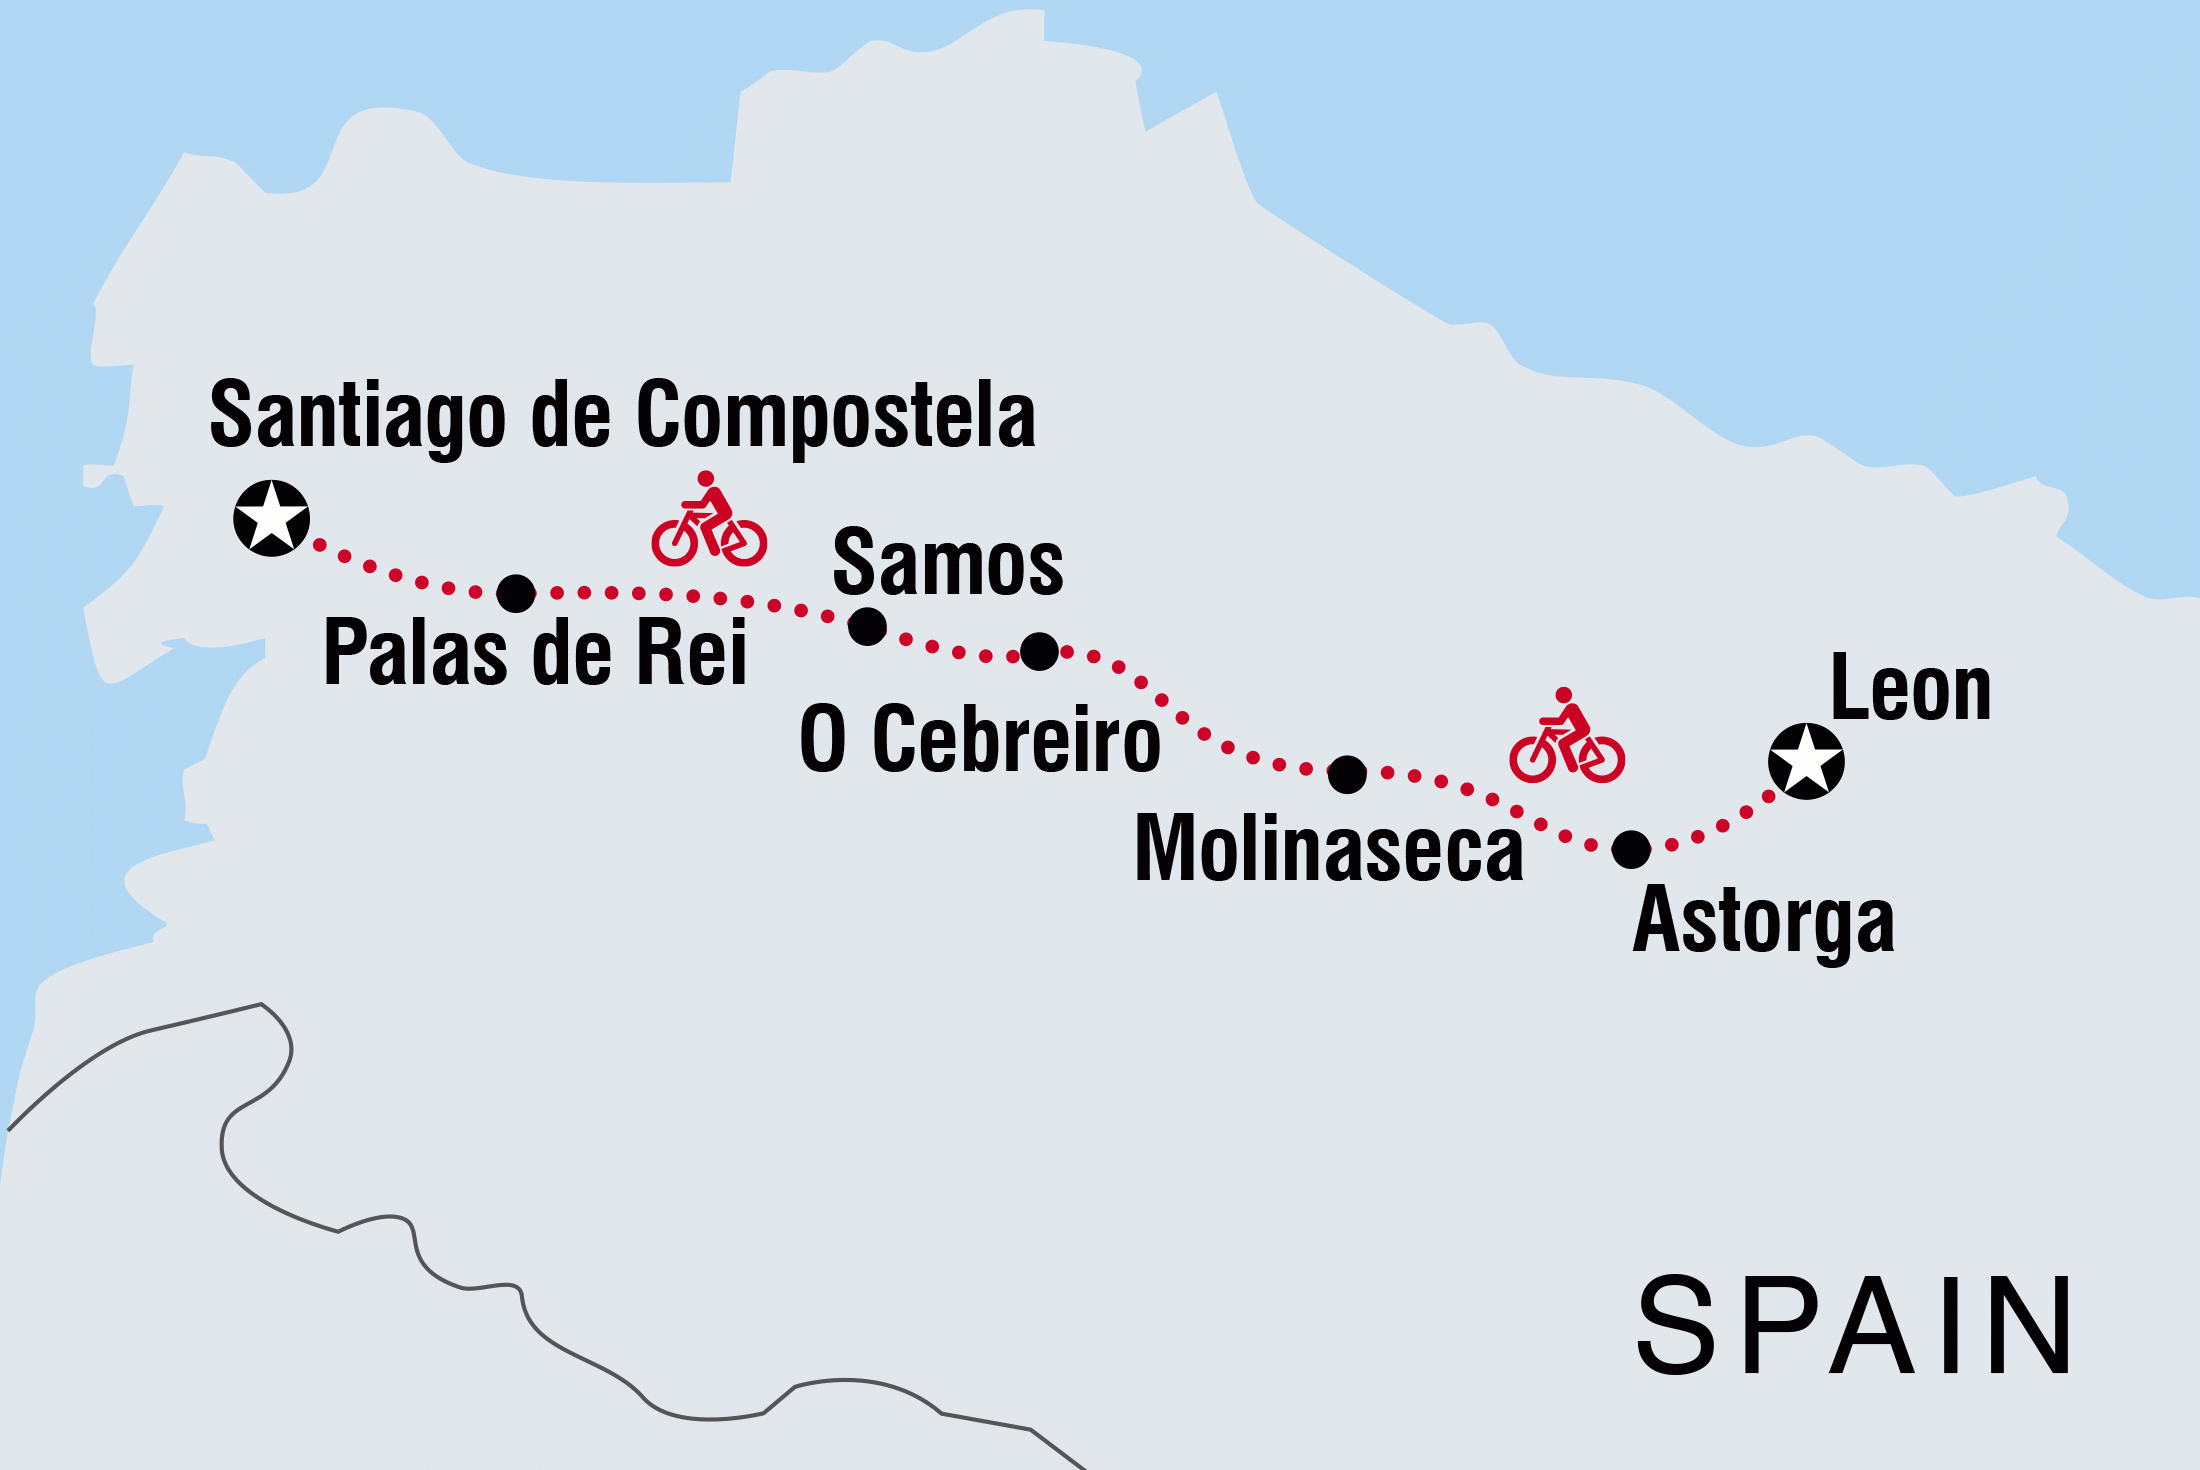 camino de santiago cycle route map